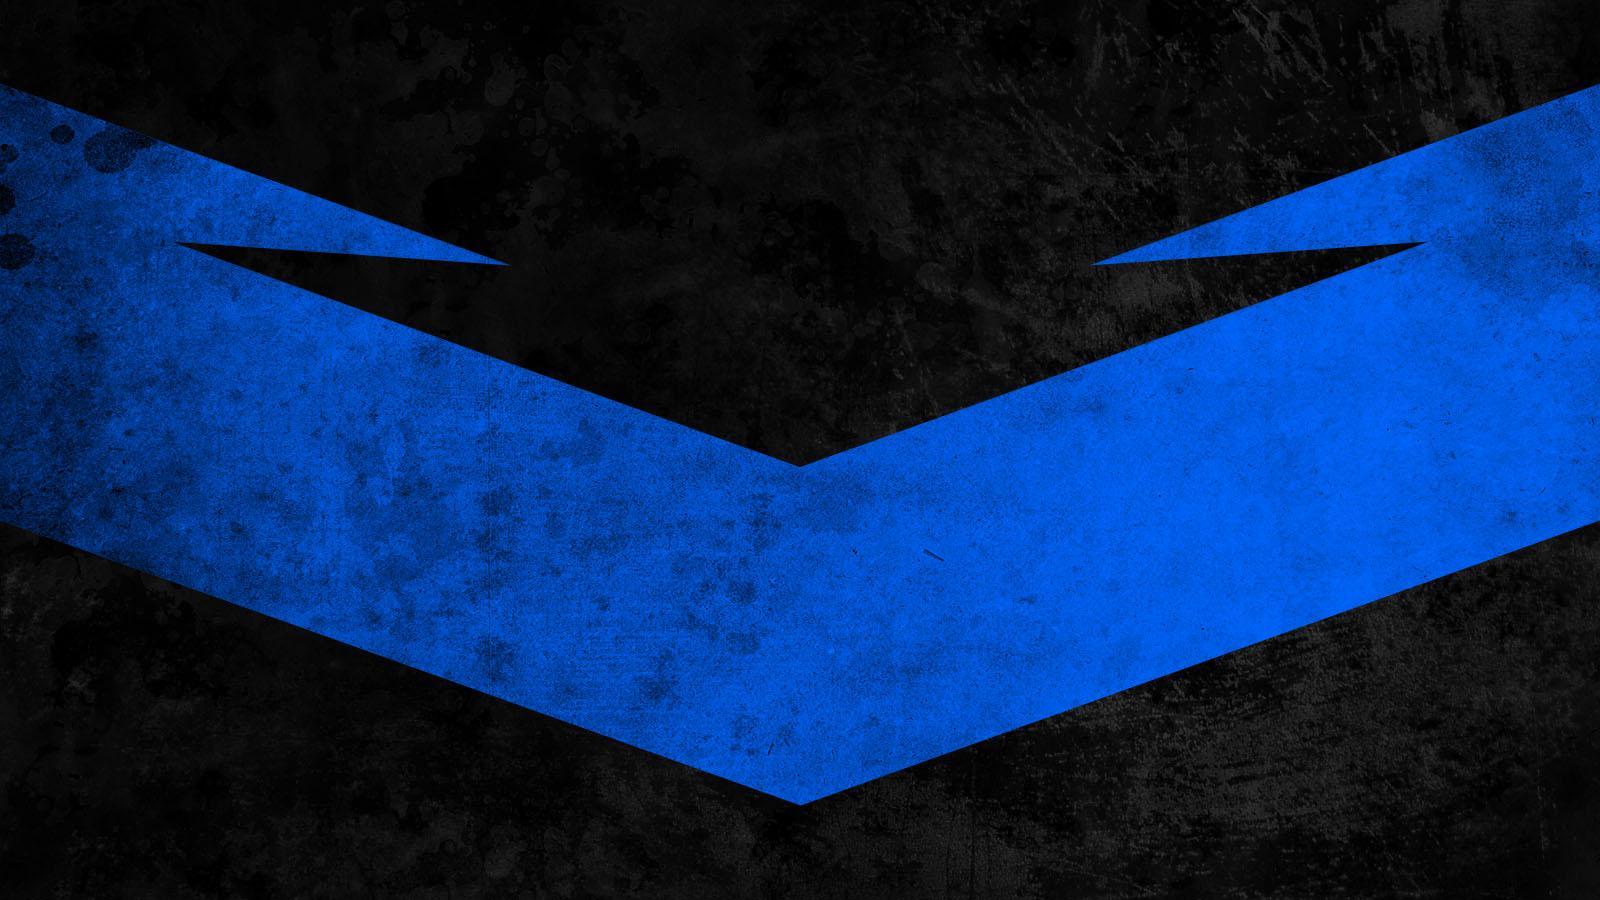 Free download Nightwing Logo Wallpaper Phones [1600x900] for your Desktop, Mobile & Tablet. Explore Nightwing Wallpaper Phone. Nightwing iPhone Wallpaper, New 52 Nightwing Wallpaper, Nightwing HD Wallpaper